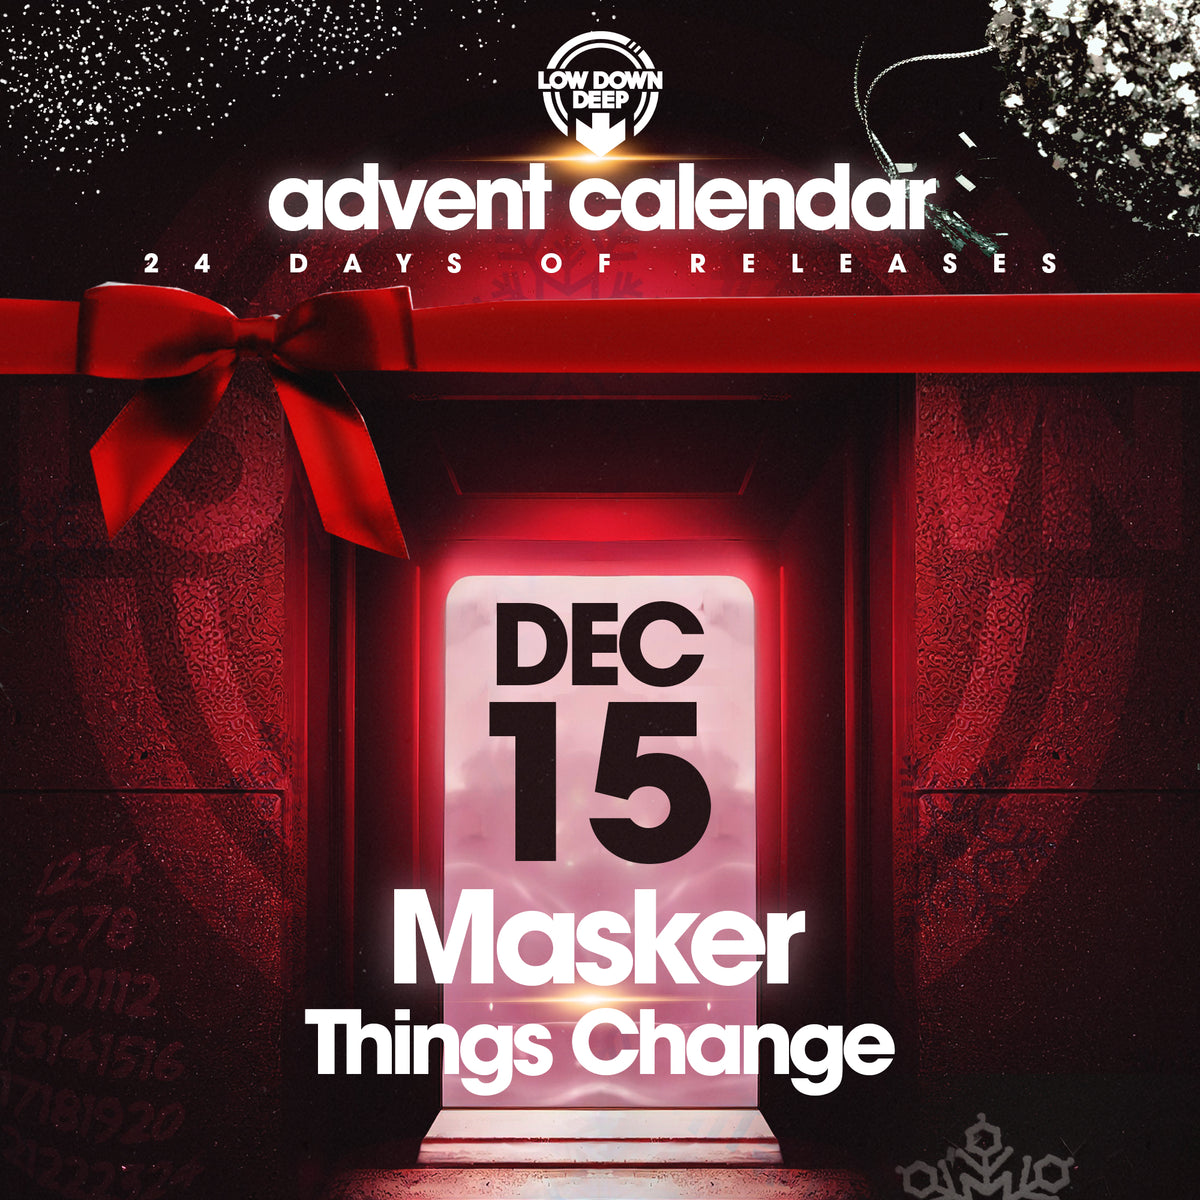 LDDRADV015 - Masker 'Things Change'